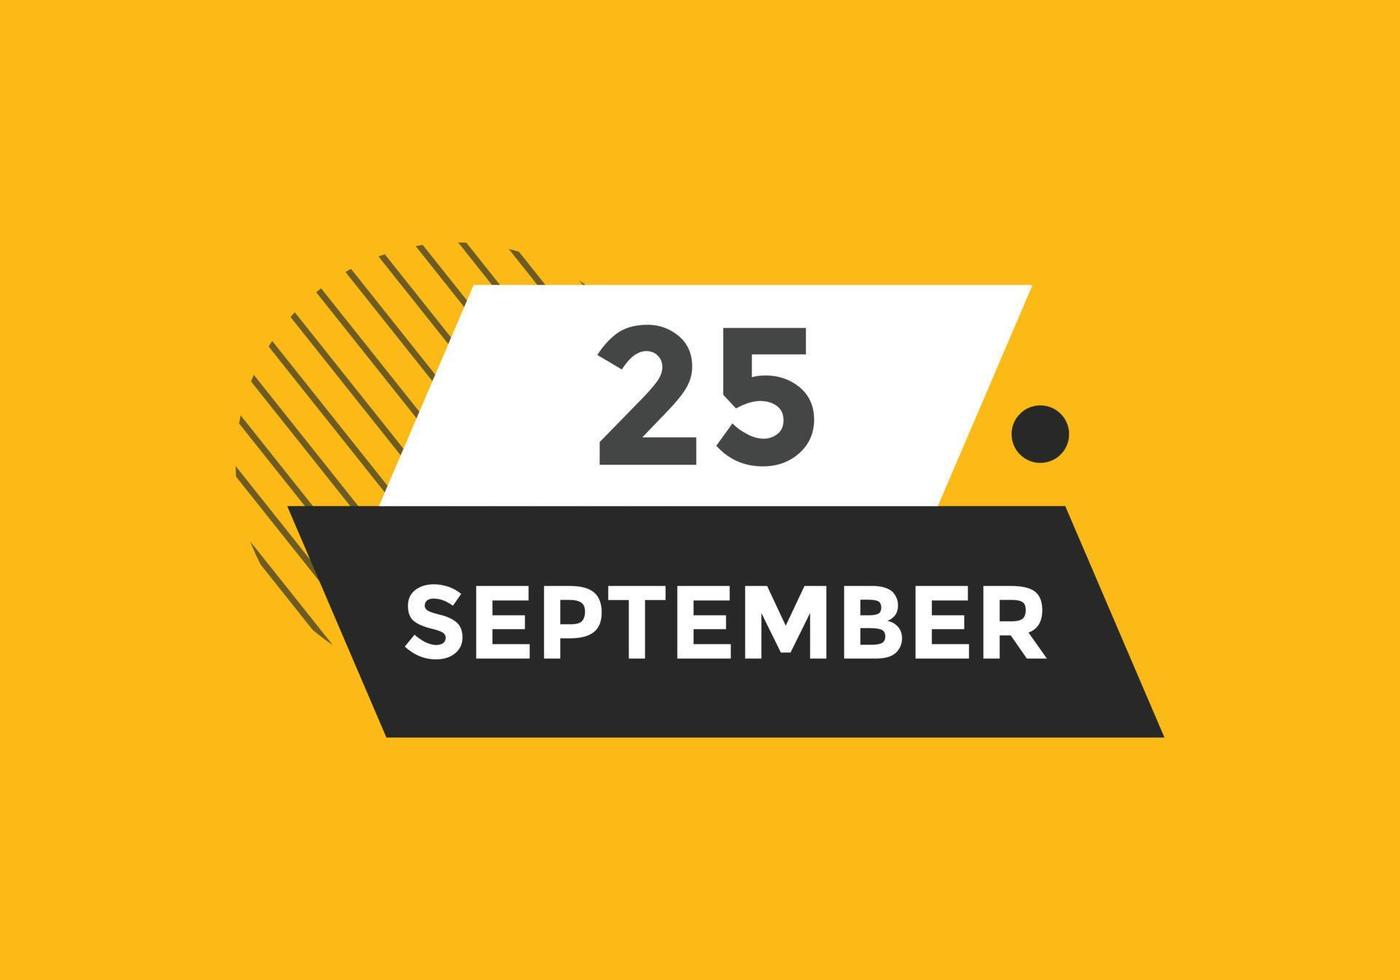 september 25 calendar reminder. 25th september daily calendar icon template. Calendar 25th september icon Design template. Vector illustration